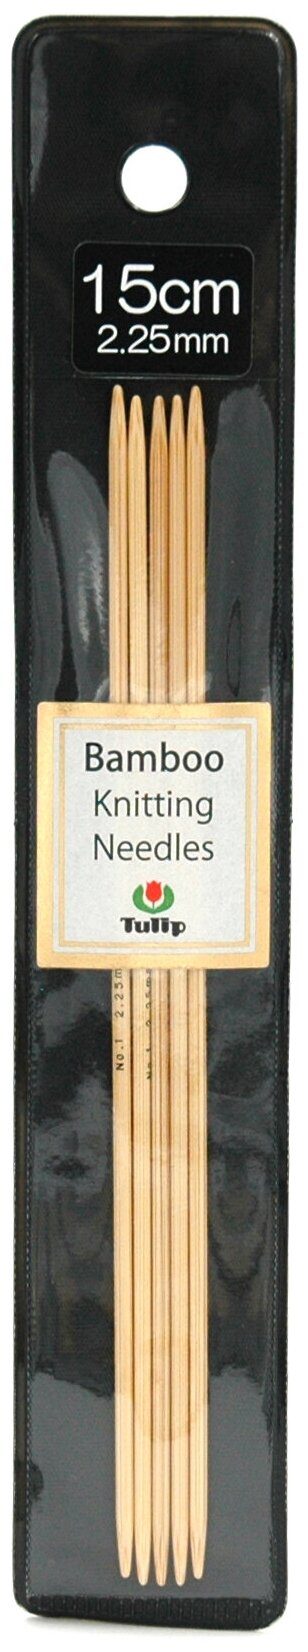 Спицы чулочные Bamboo 2,25мм/15см, Tulip, KND060225